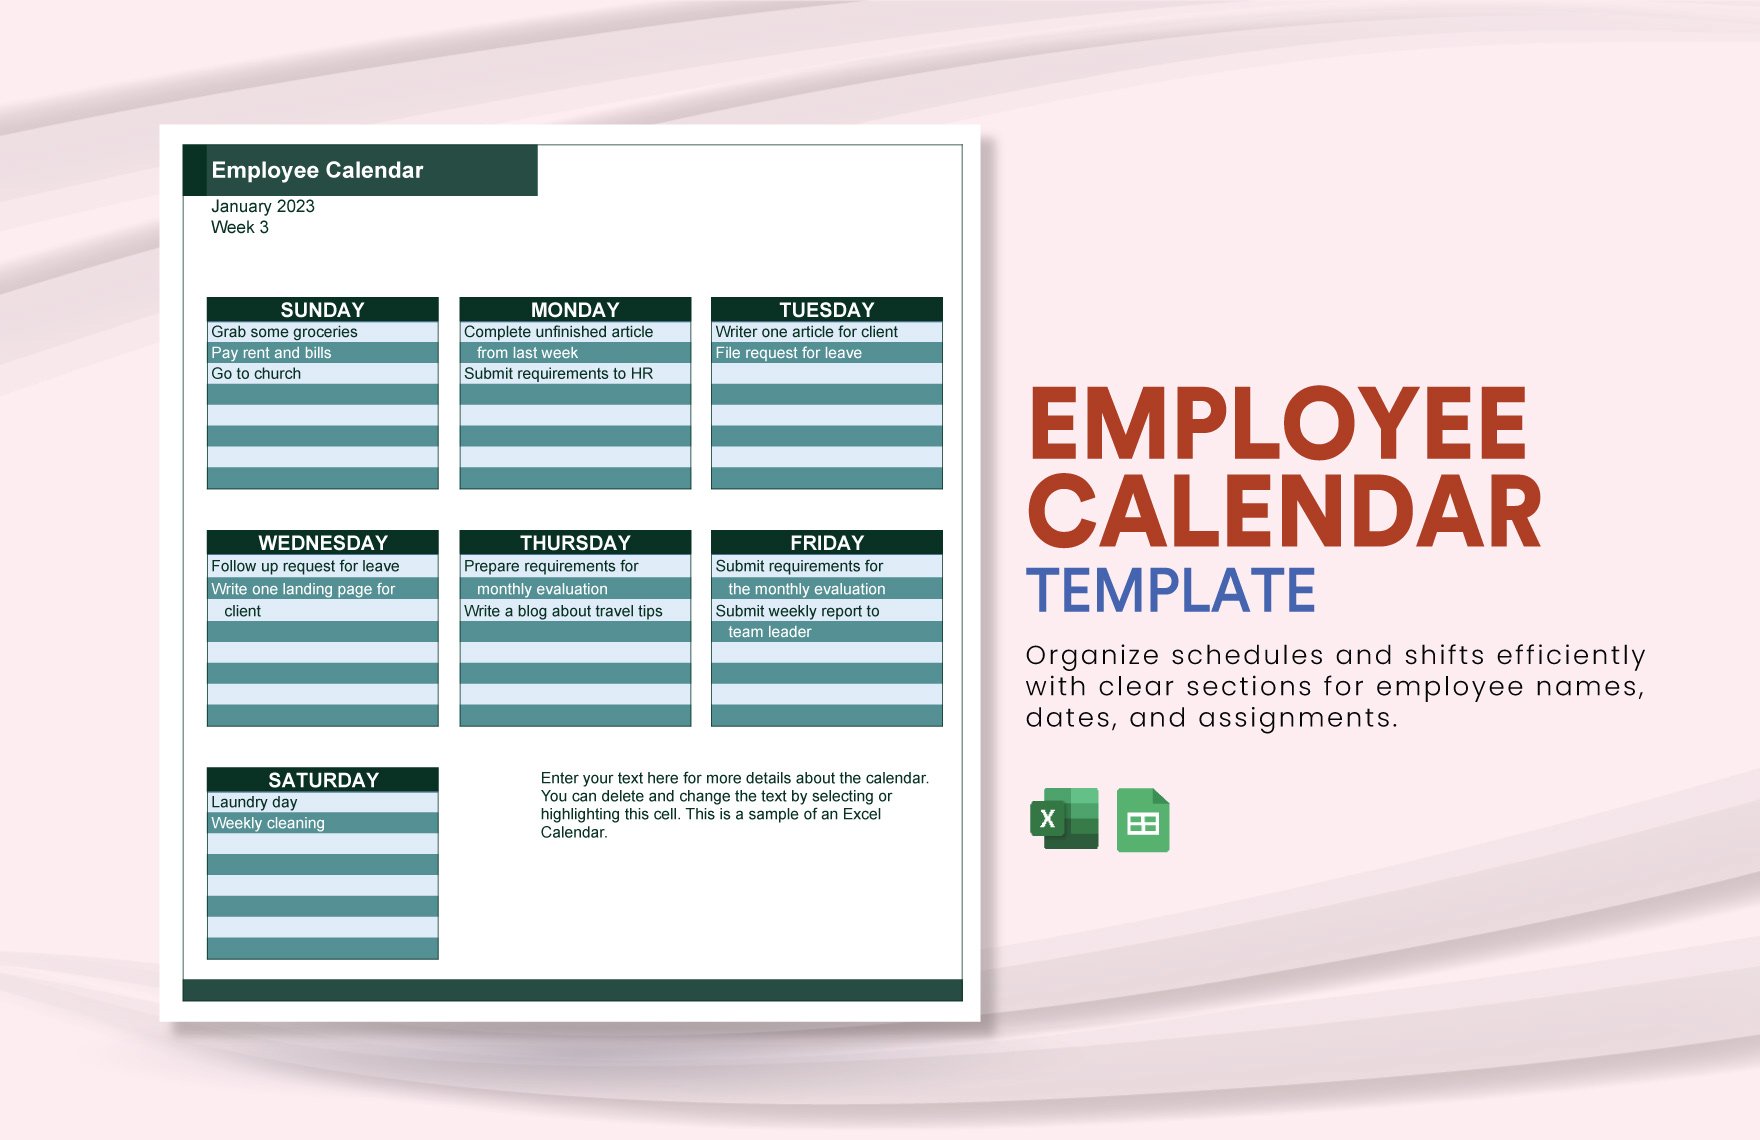 Employee Calendar in Excel, Google Sheets